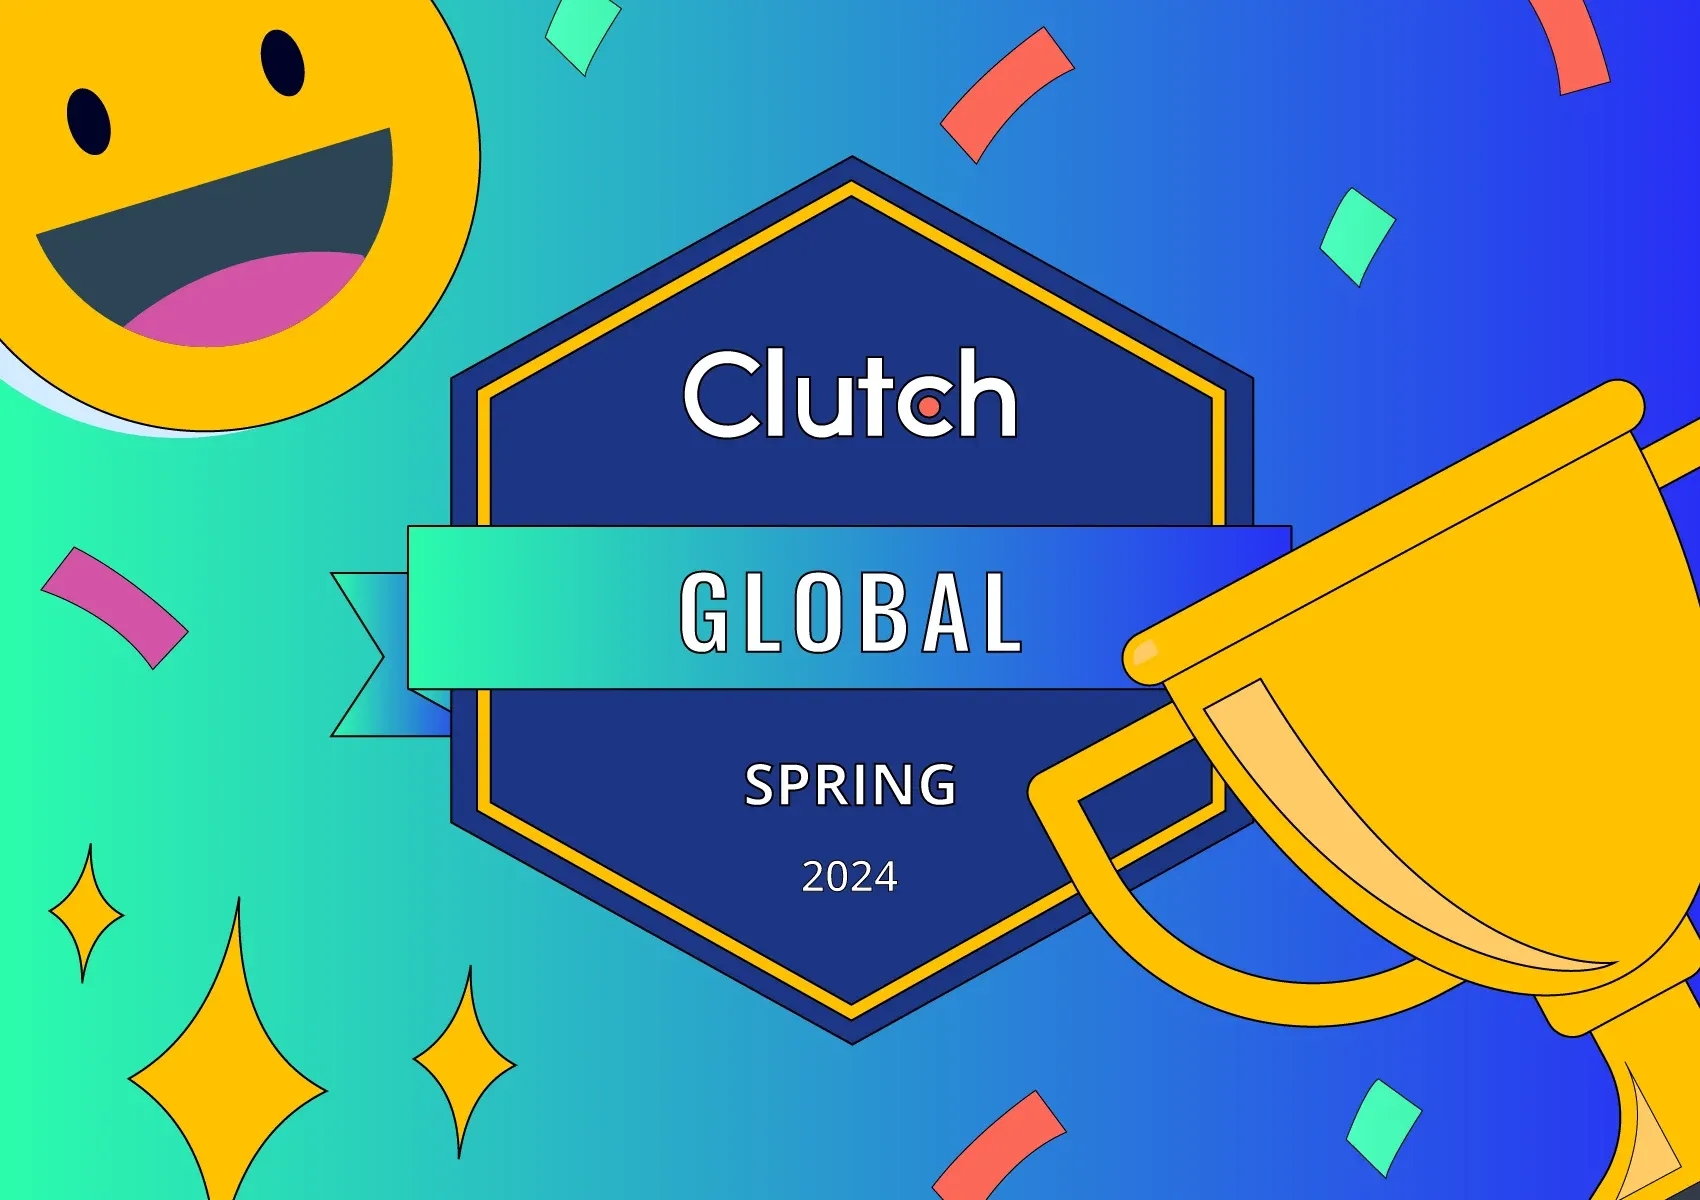 Clutch global spring 2024